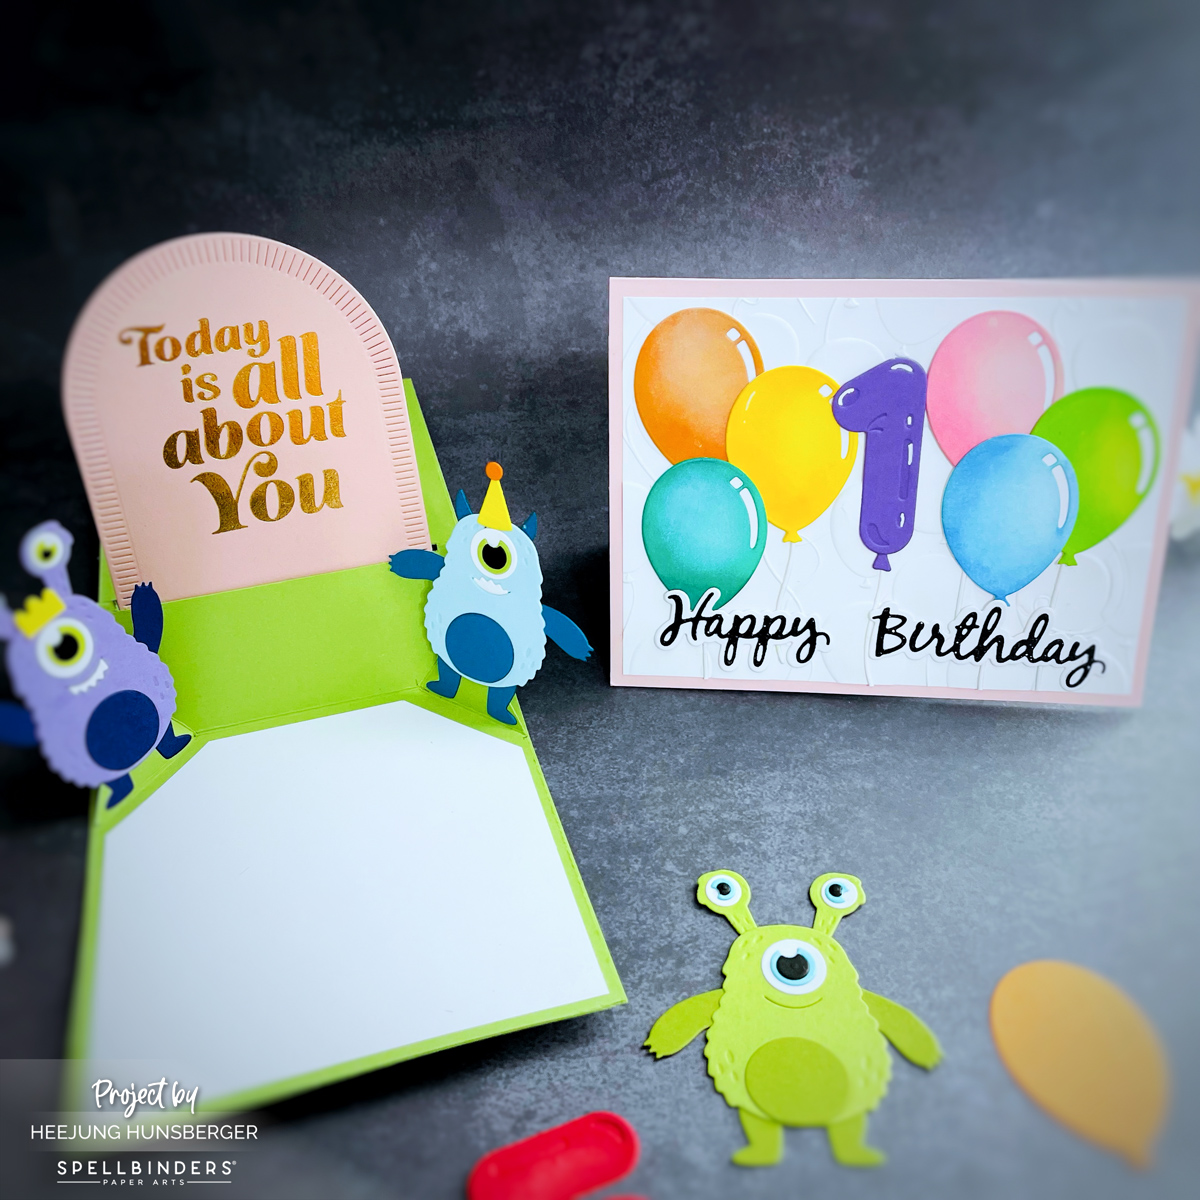 Spllebinders- Monster Birthday Pop-up Card